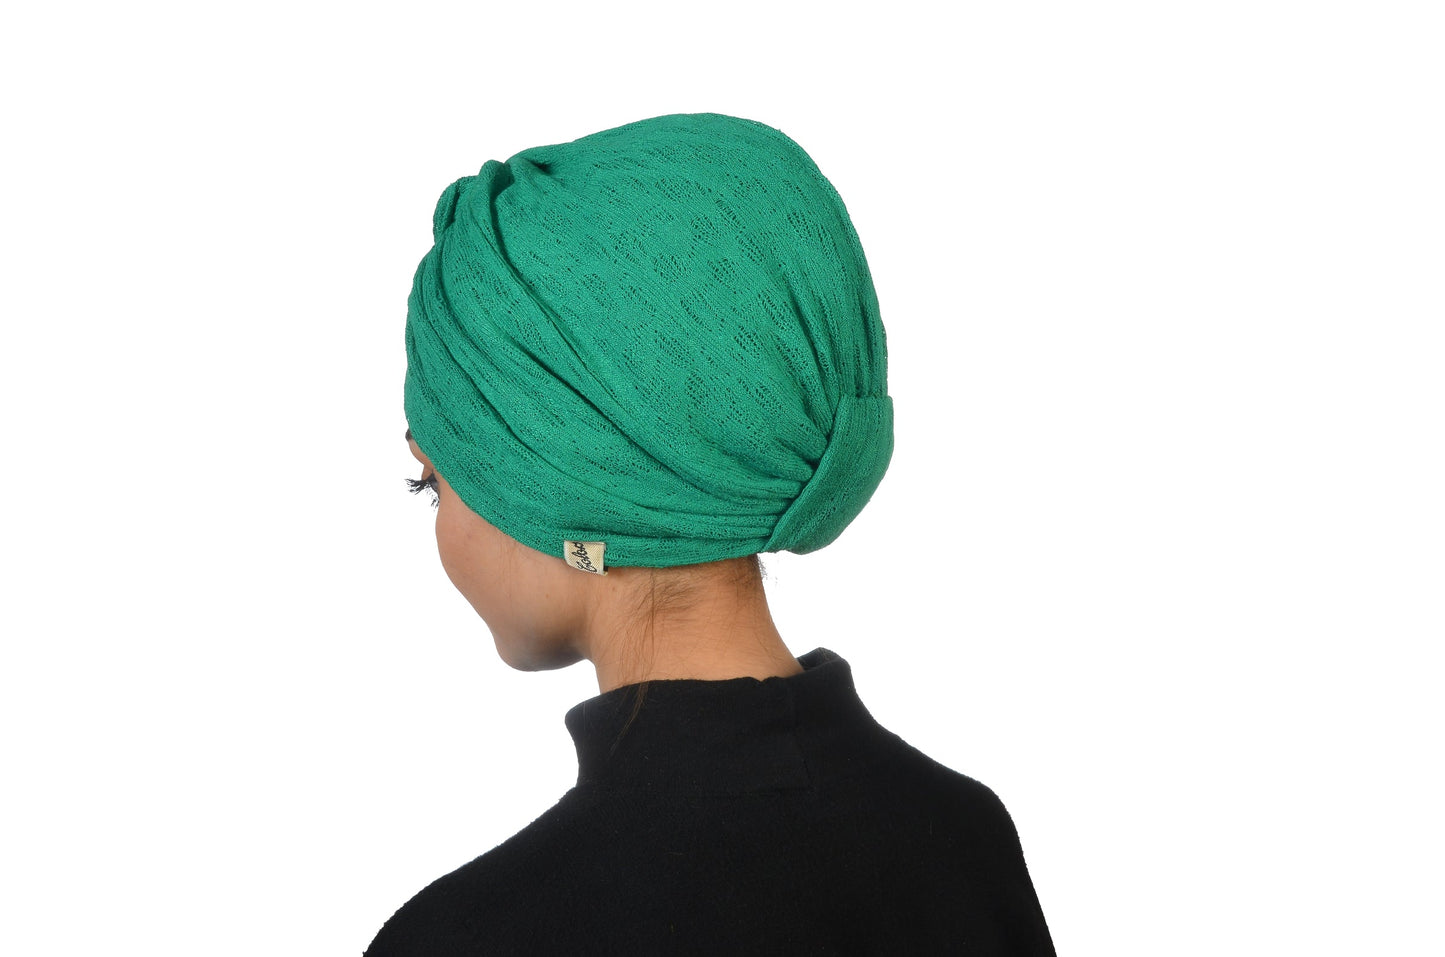 Twisted Knitty Green Yeşil Renk Esnek Örme Kumaş El Yapımı Şık Bone